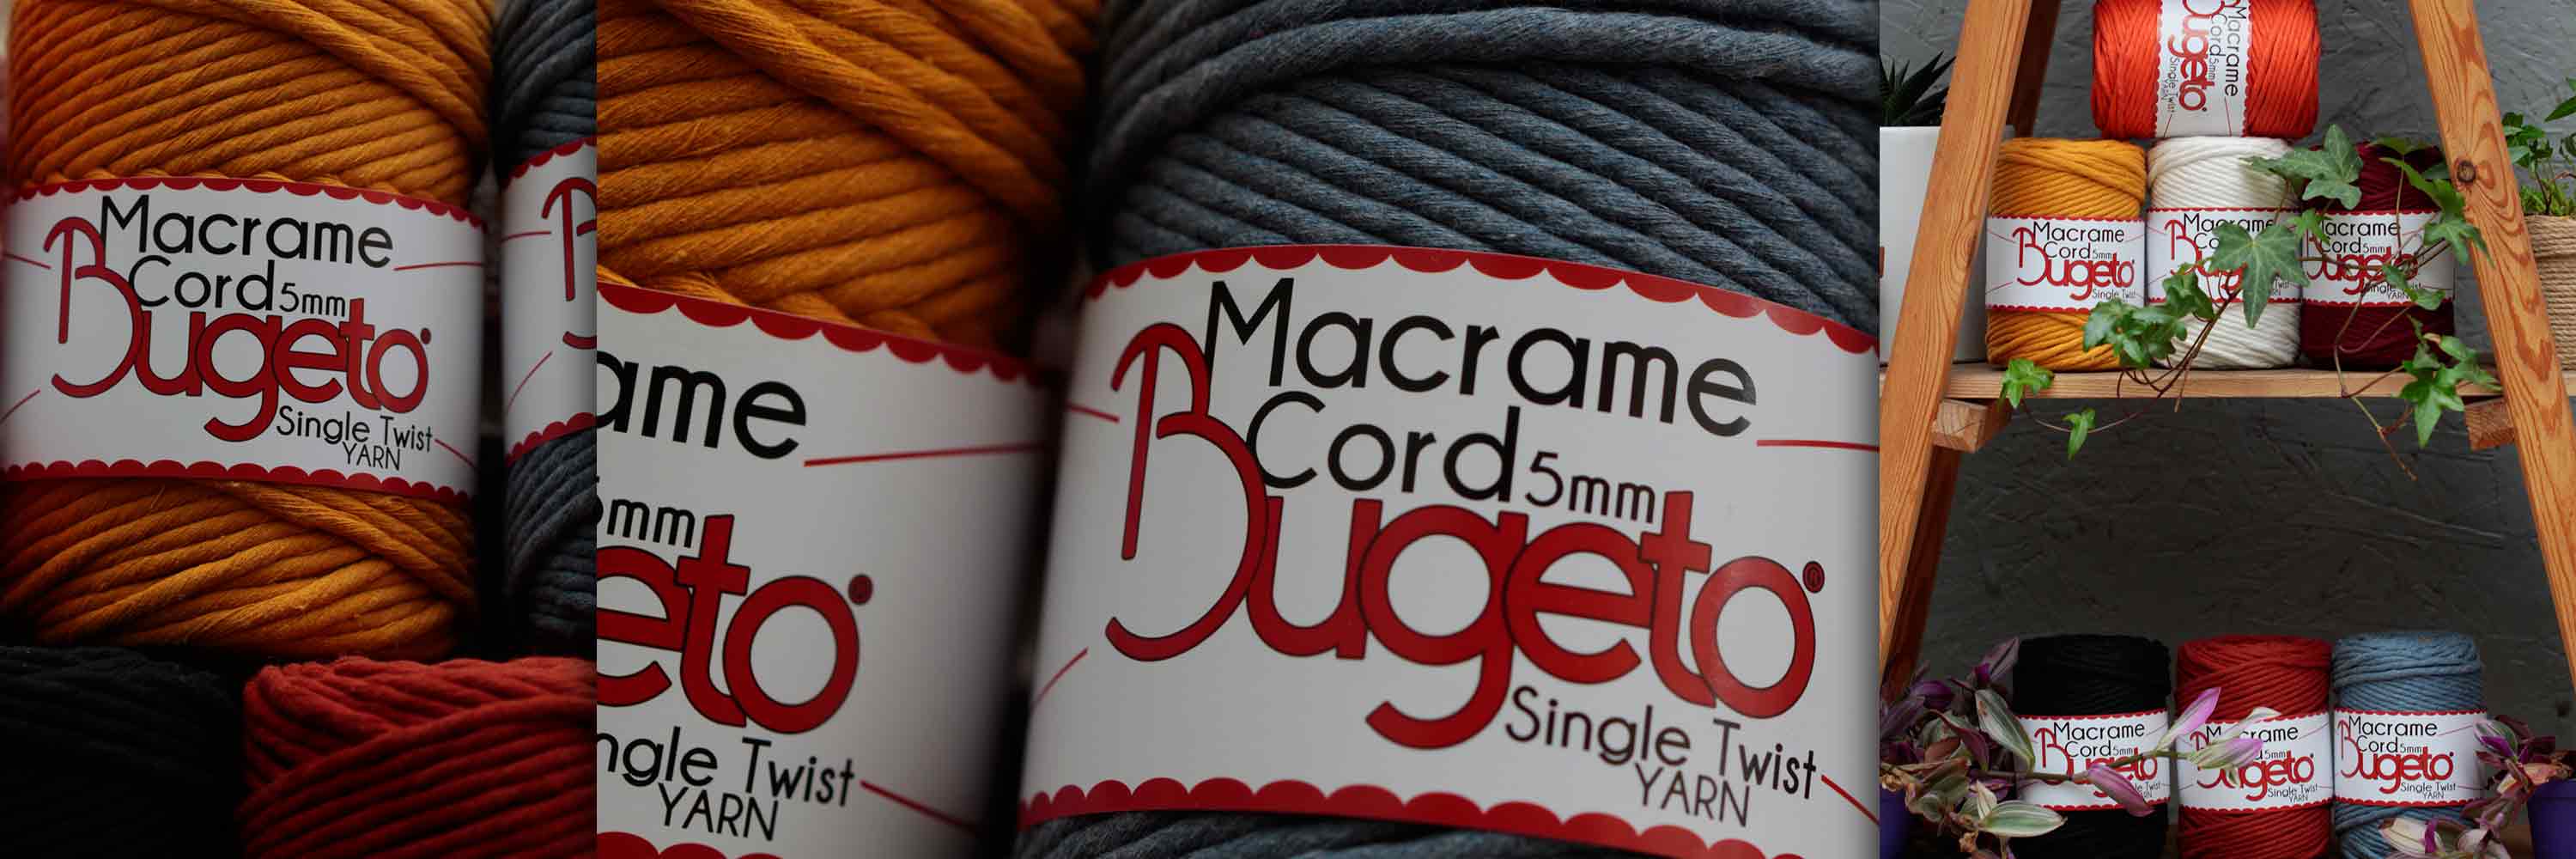 wall type macrame yarns macrame cord yarns 5mm wall type macrame yarn bugeto yarn 